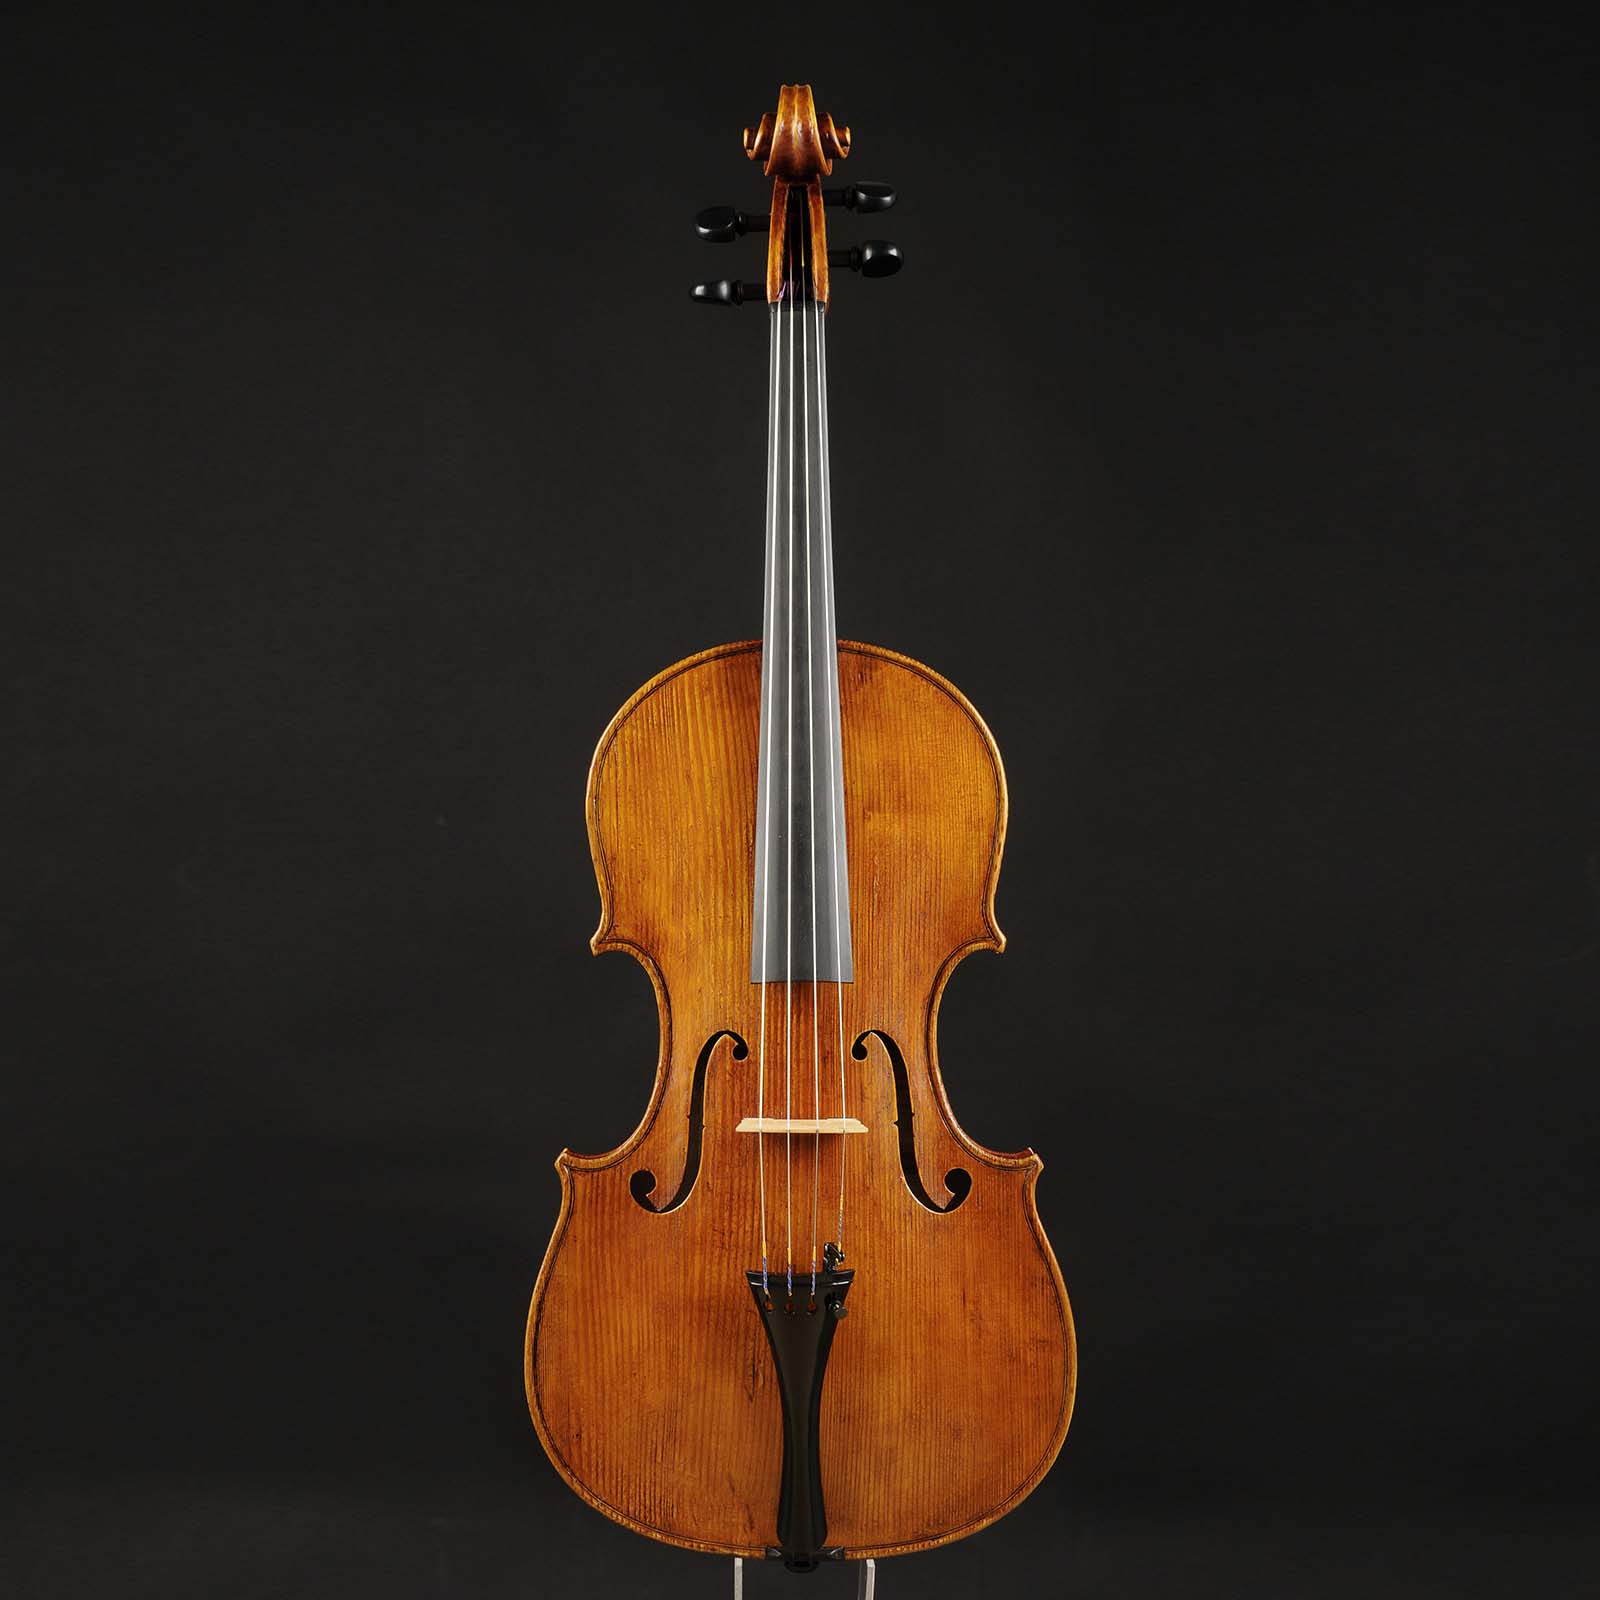 Antonio Stradivari Cremona 1672 “Gustav“ cm 42 - Image 1